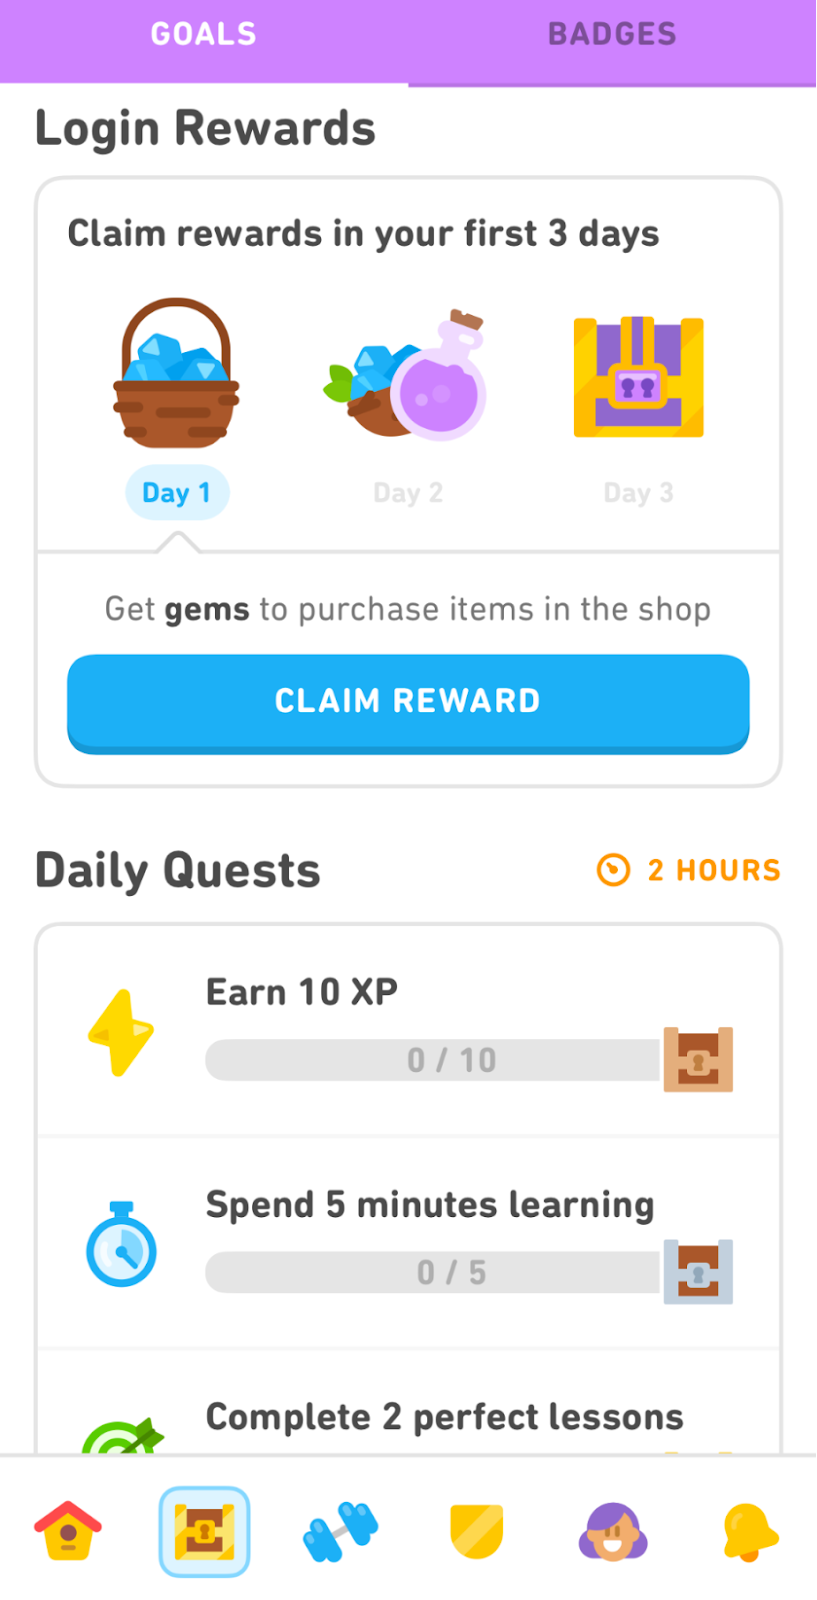 Duolingo's login rewards section